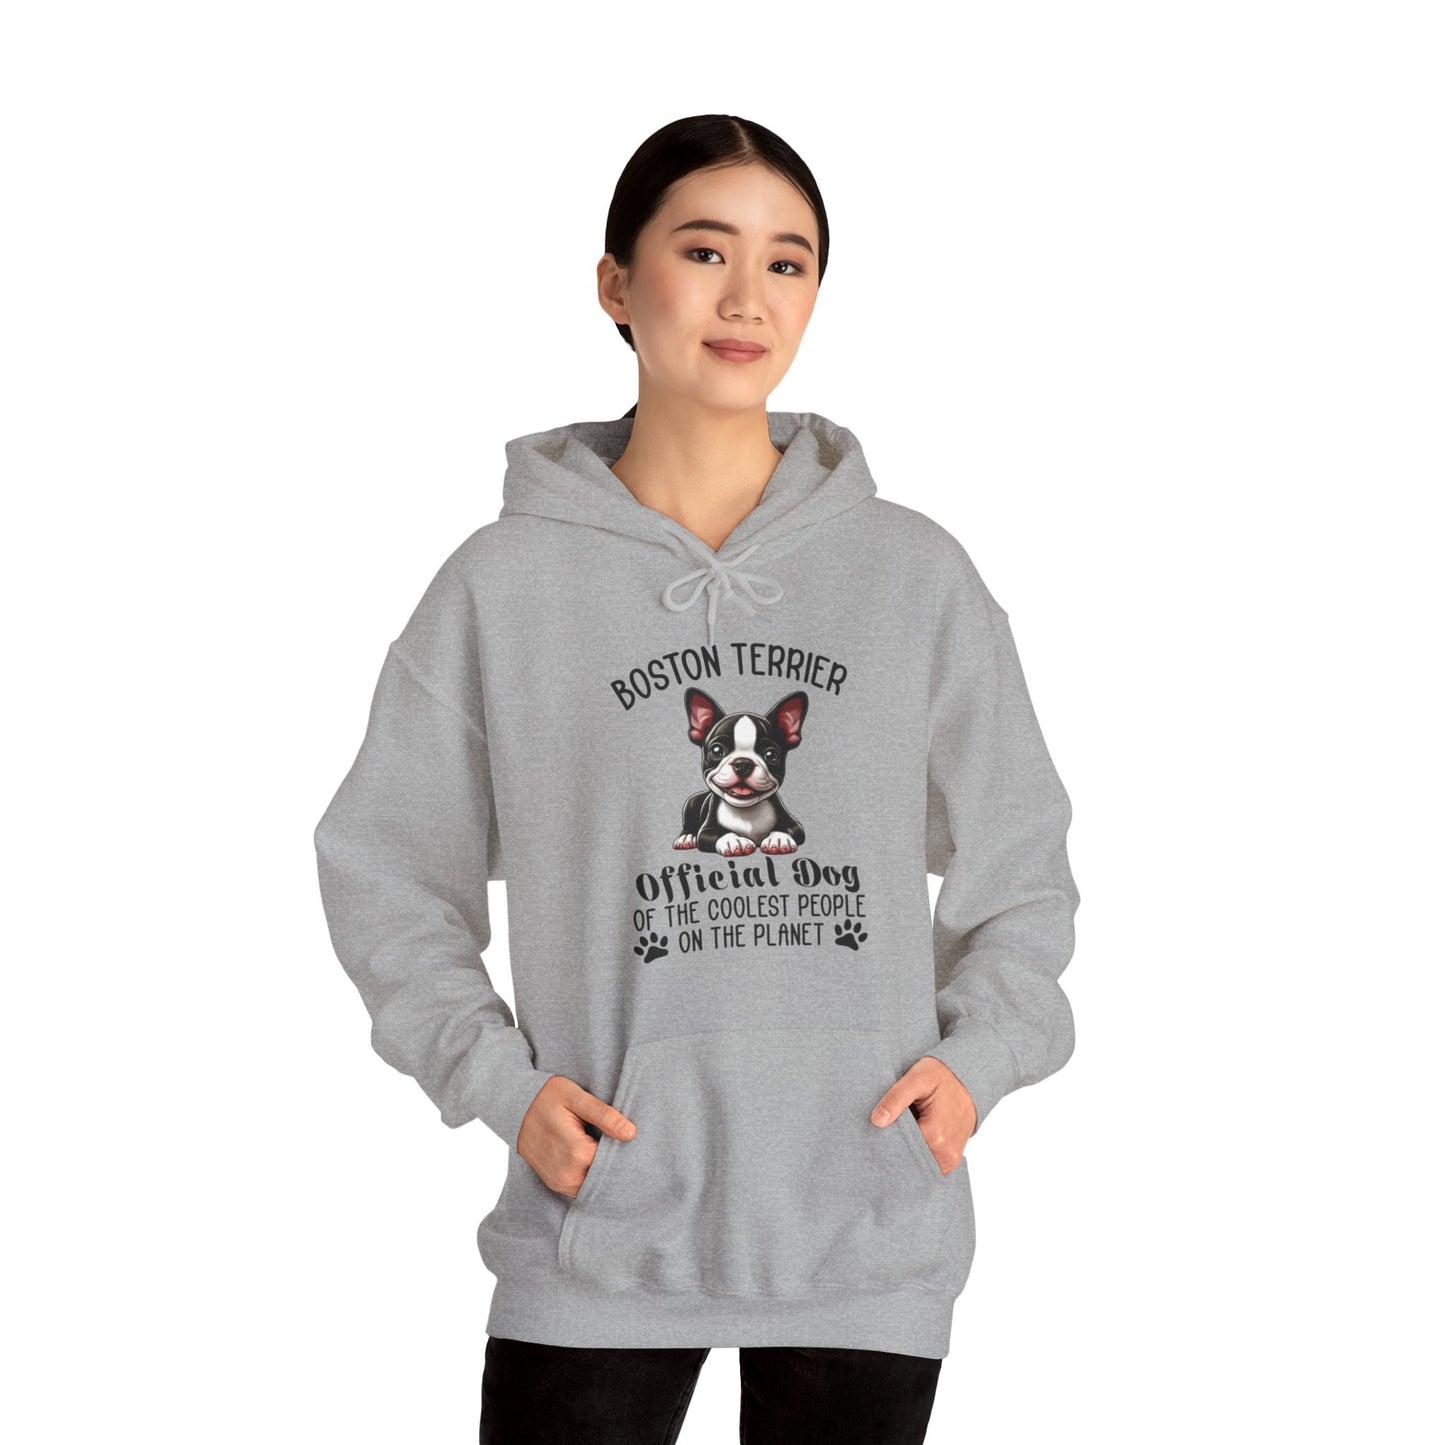 Watson    - Unisex Hoodie for Boston Terrier lovers